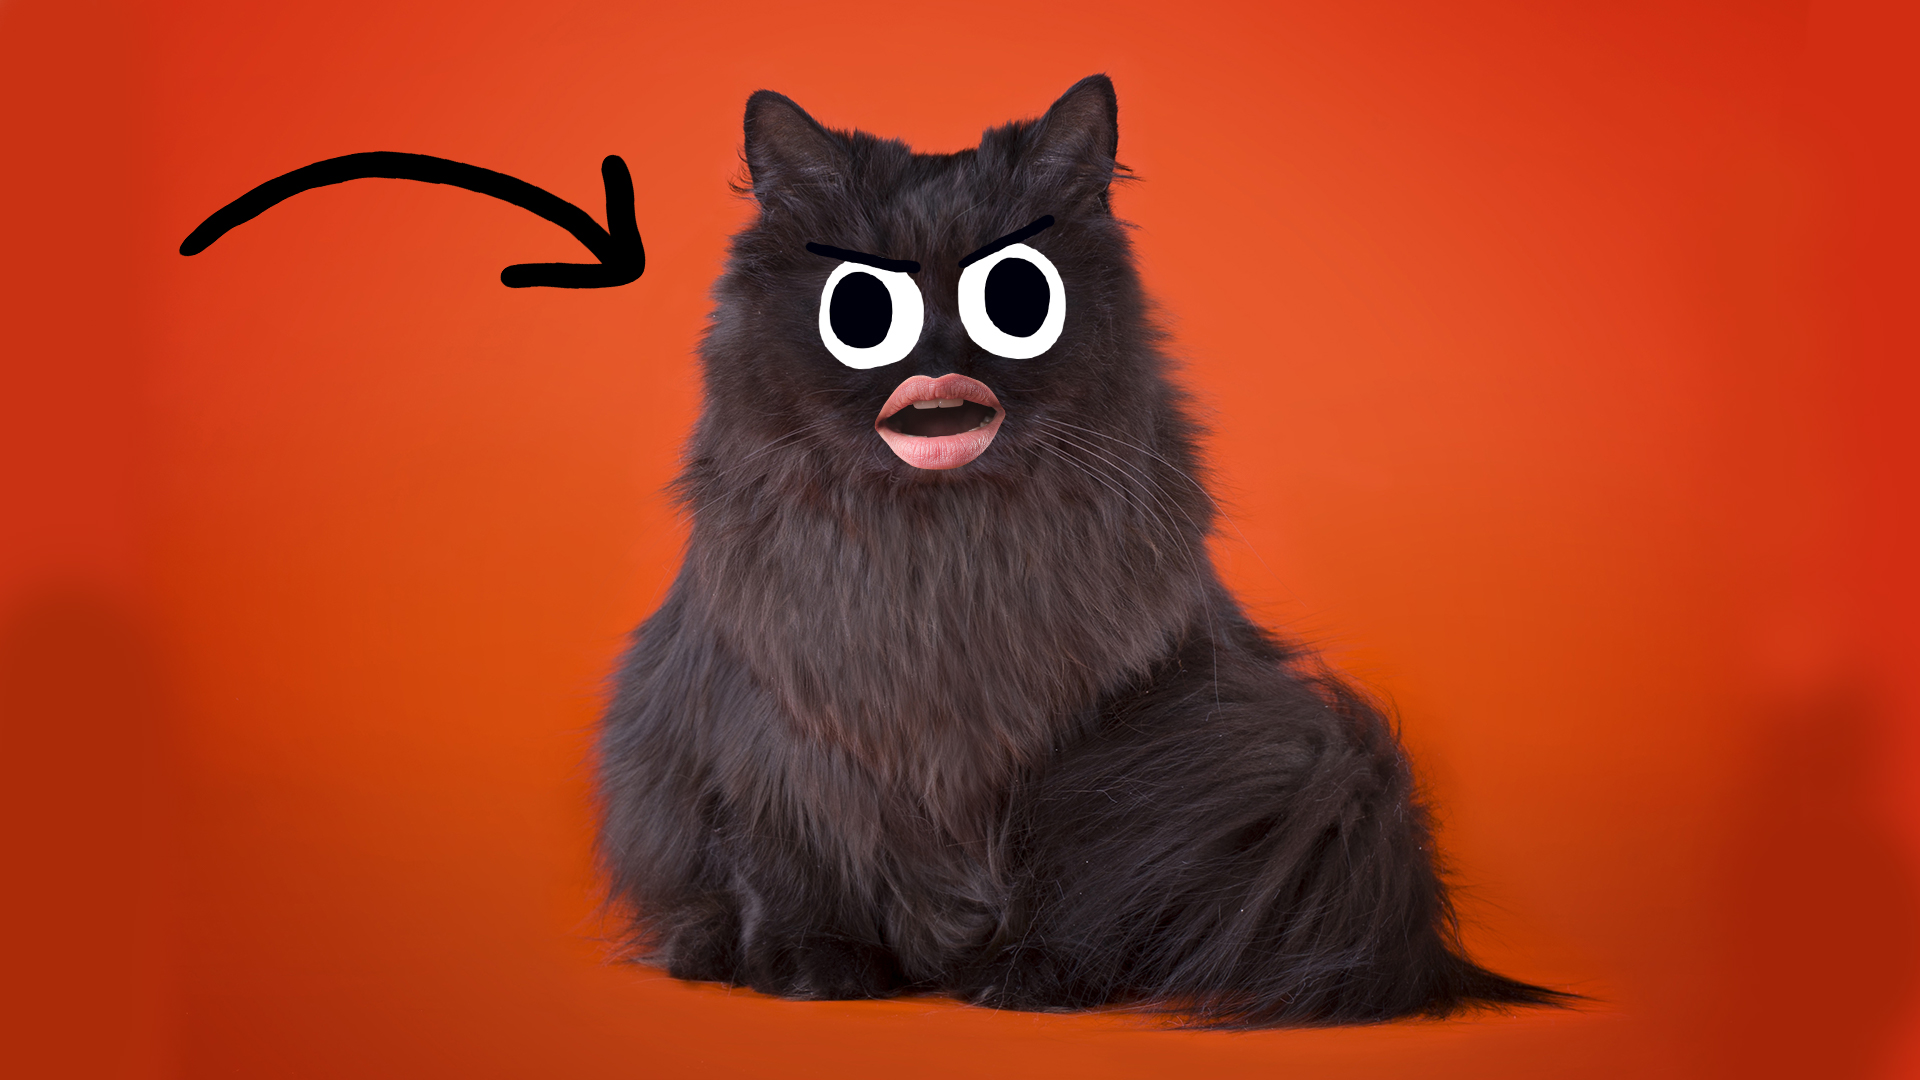 A black cat looks annoyed